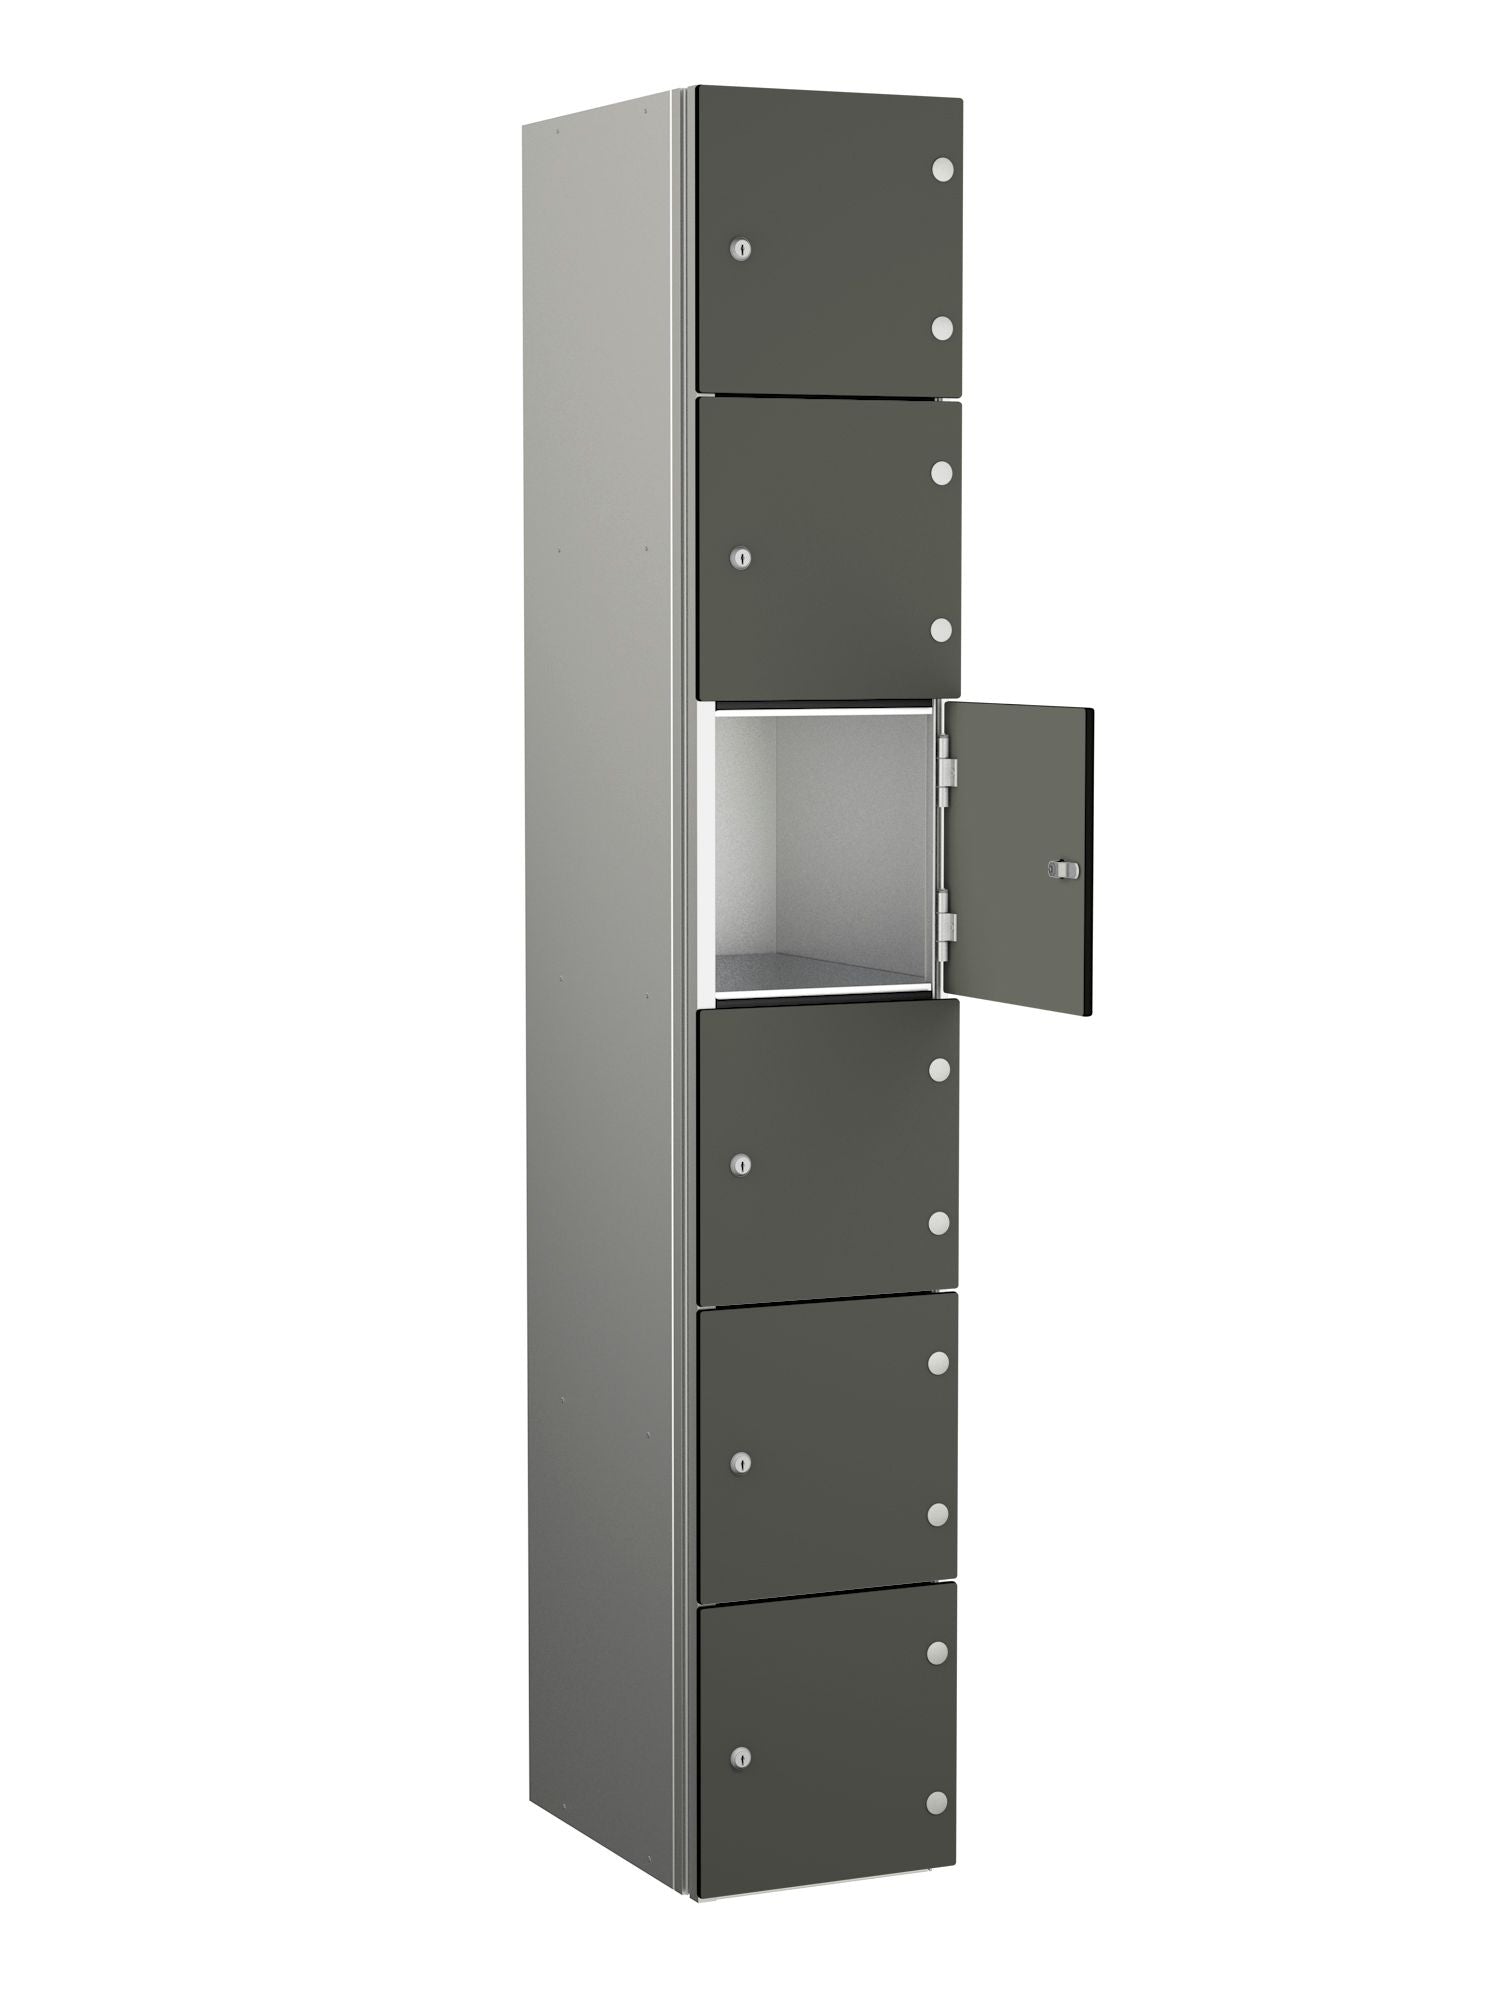 ZENBOX WET AREA LOCKERS WITH SGL DOORS - DARK GREY 6 DOOR Storage Lockers > Lockers > Cabinets > Storage > Probe > One Stop For Safety   